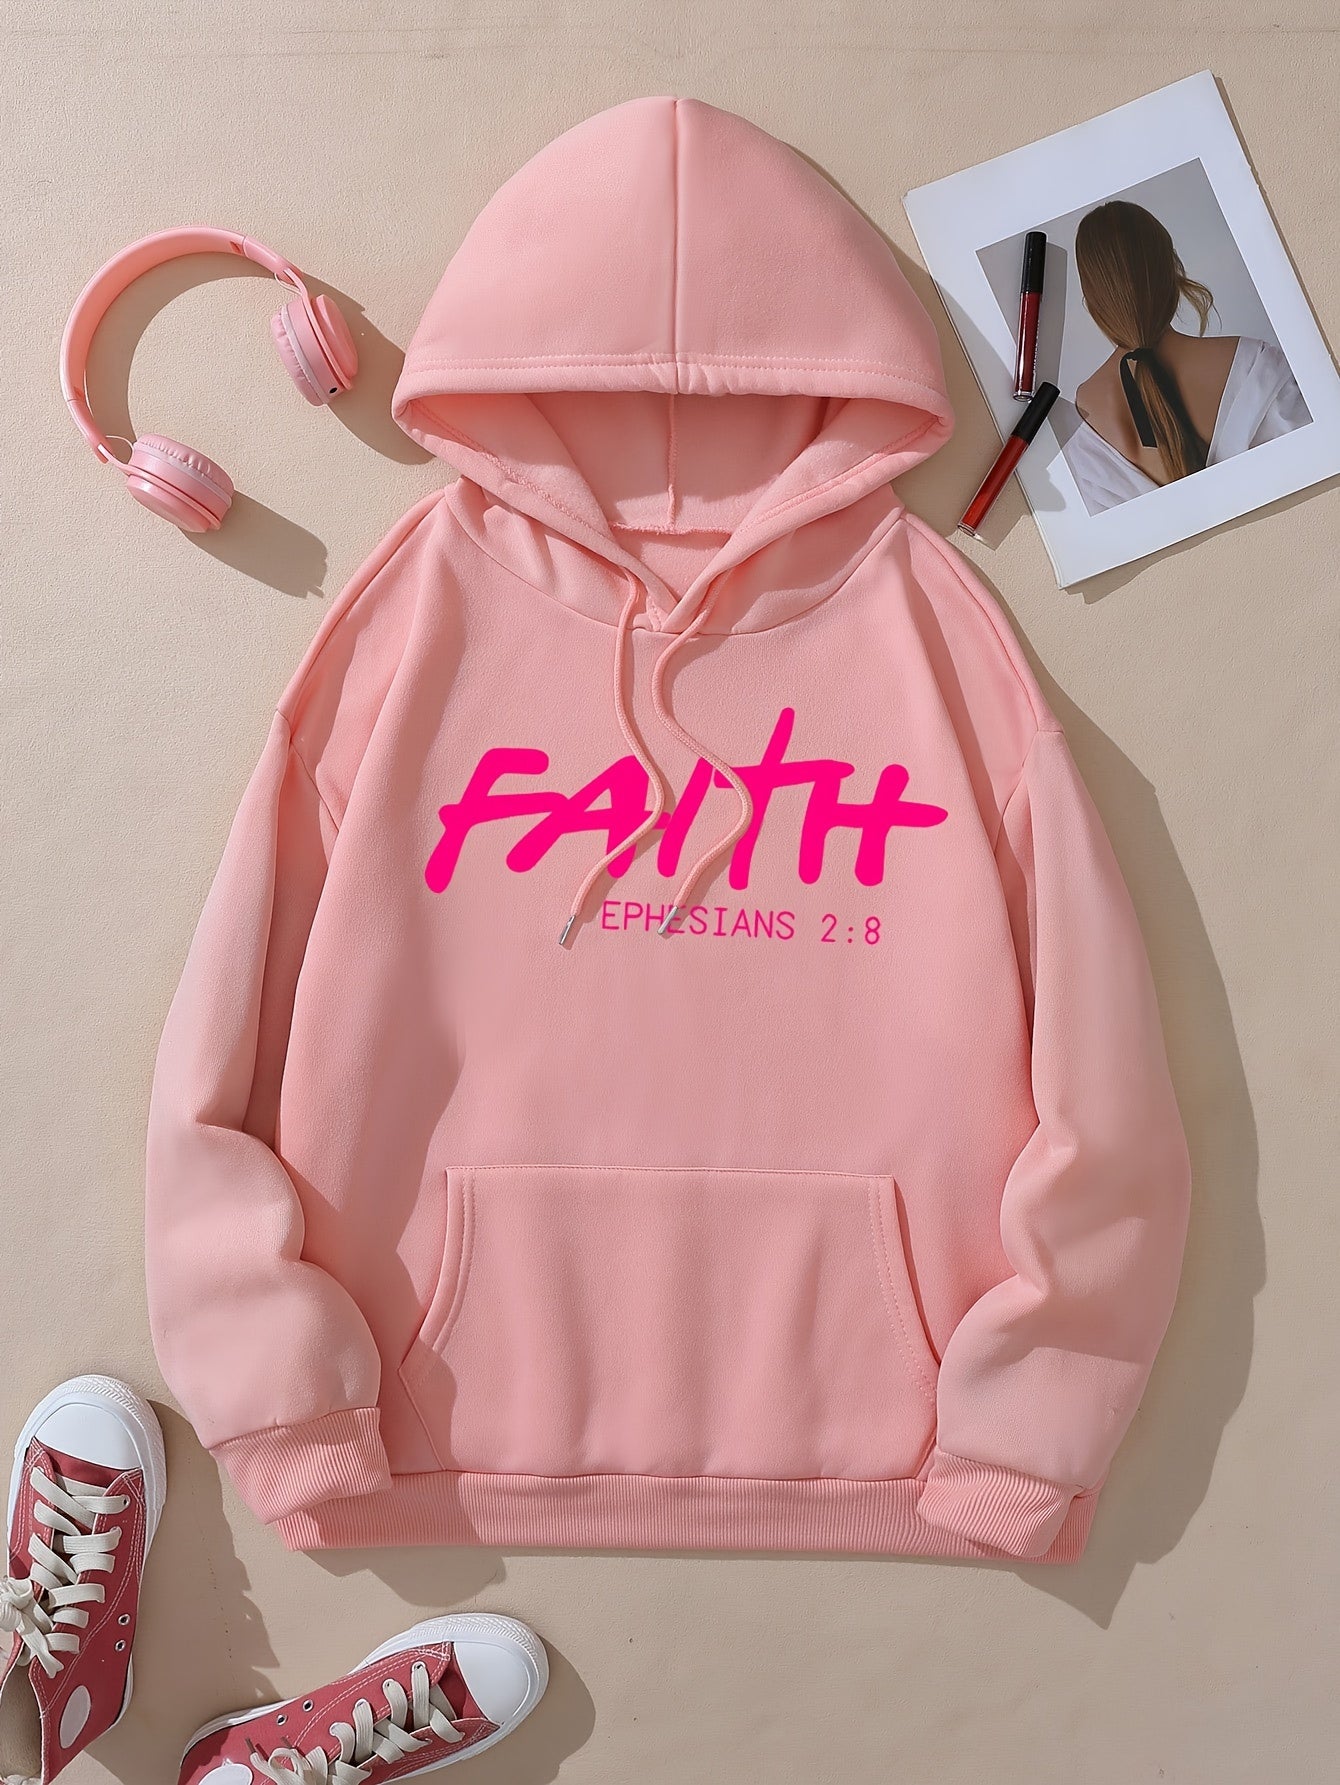 Ephesians 2:8 Faith Women's Christian Pullover Hooded Sweatshirt claimedbygoddesigns